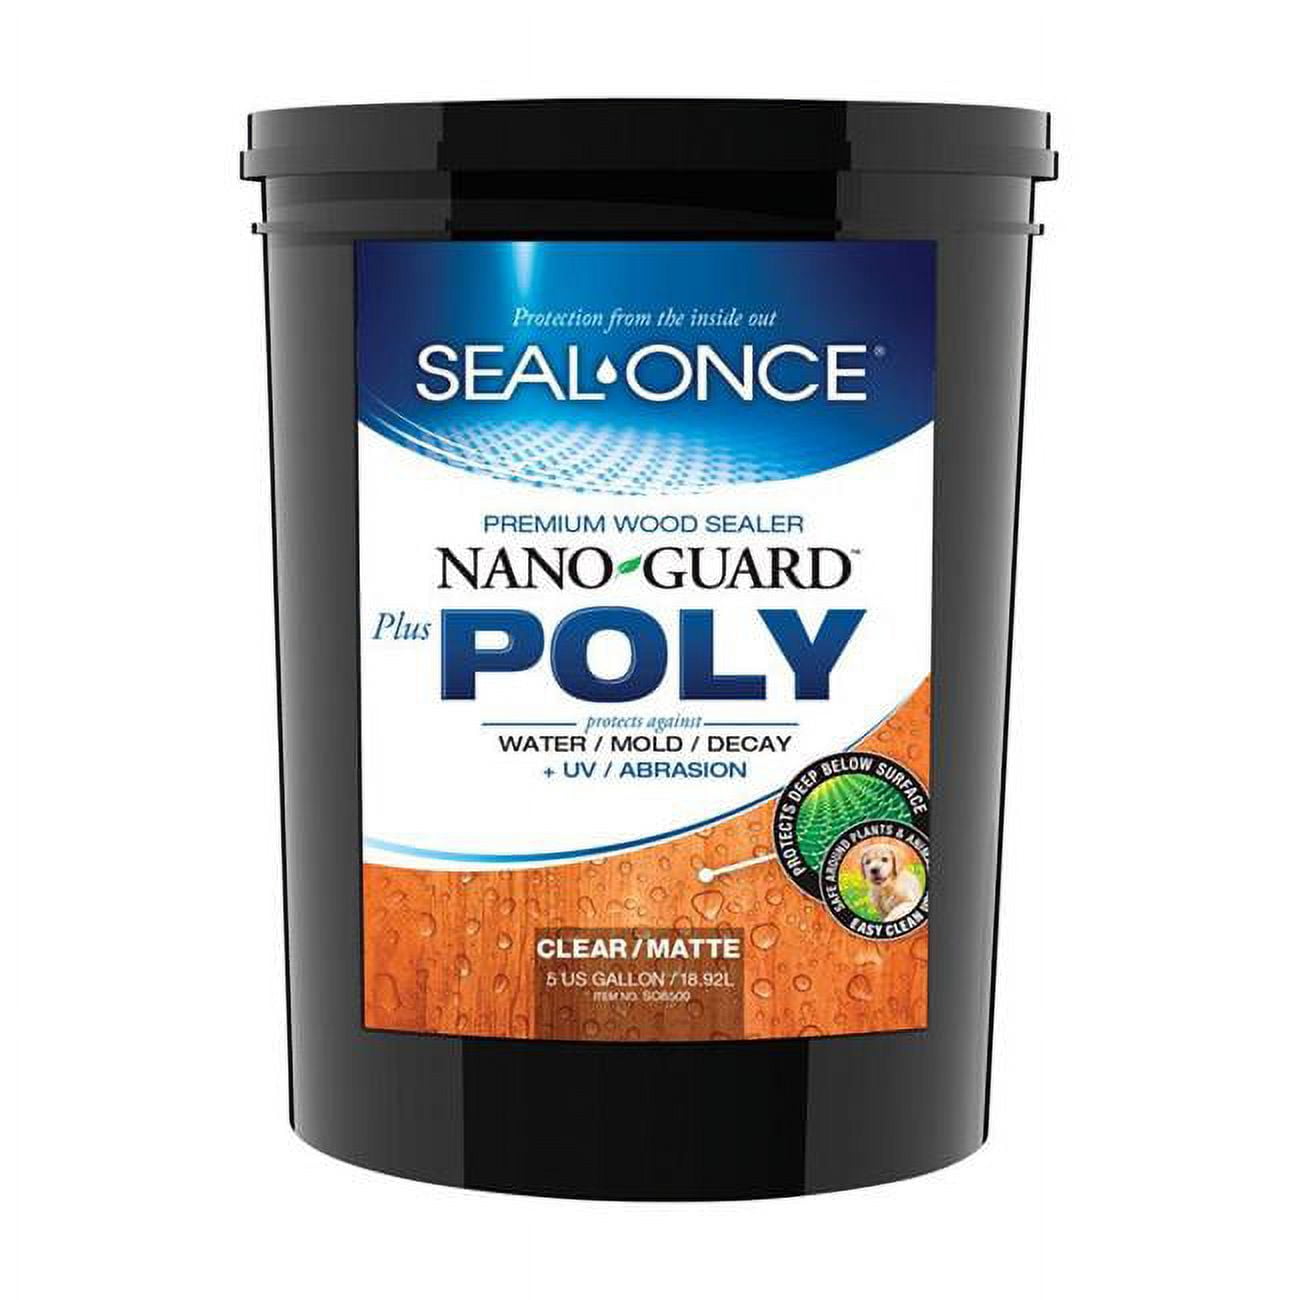 SEAL-ONCE NANO+POLY Penetrating Wood Sealer with Polyurethane (5